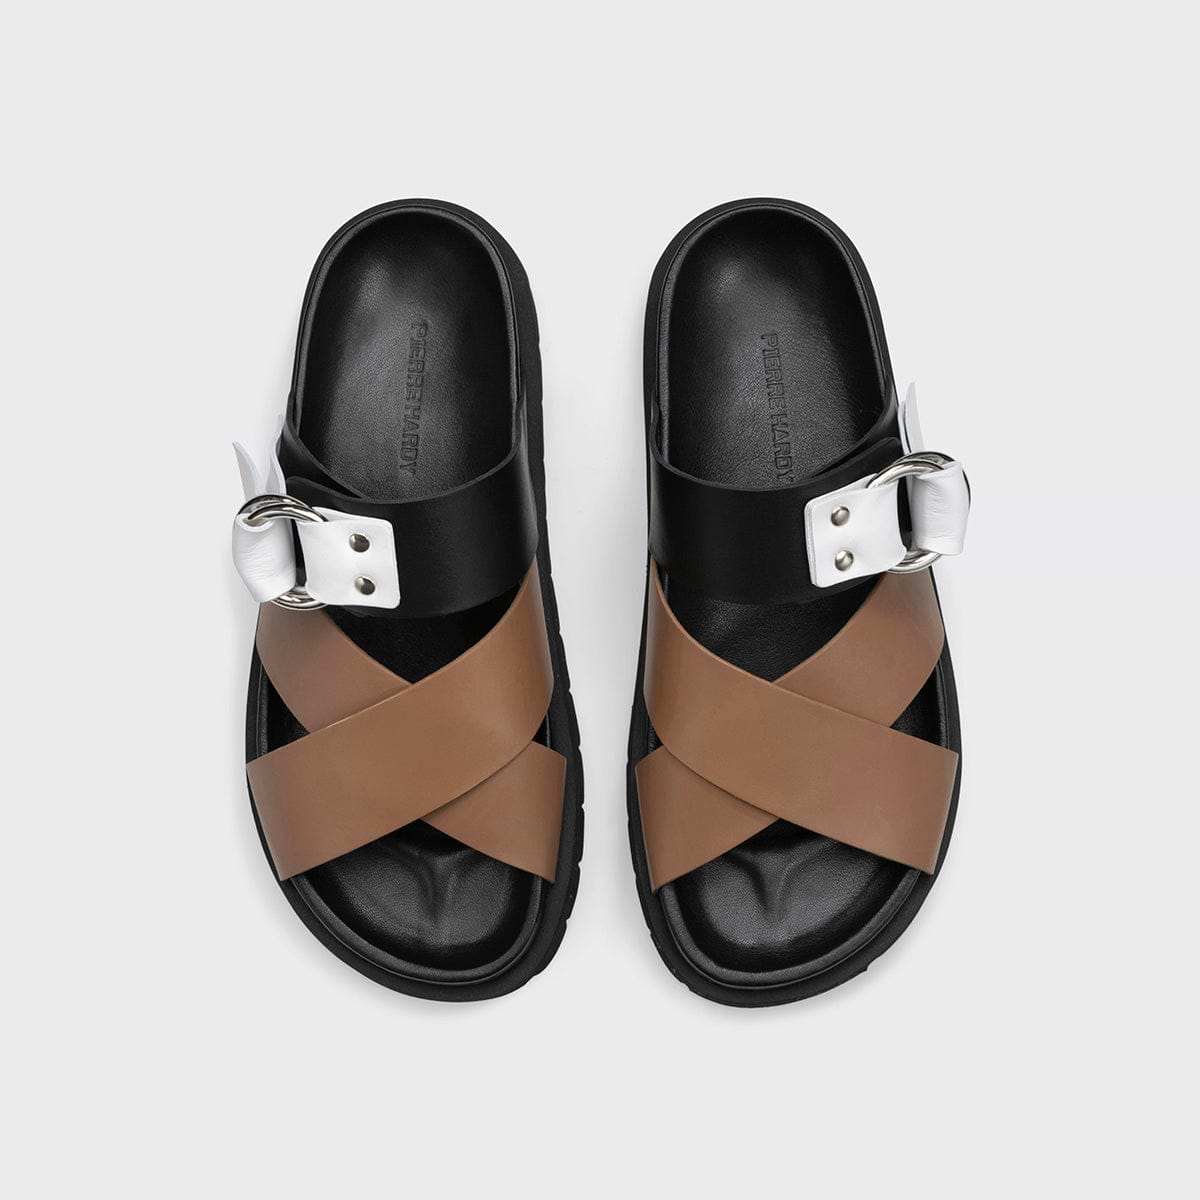 CROSS RIDER women's flat sandals in tobacco leather — PIERRE HARDY